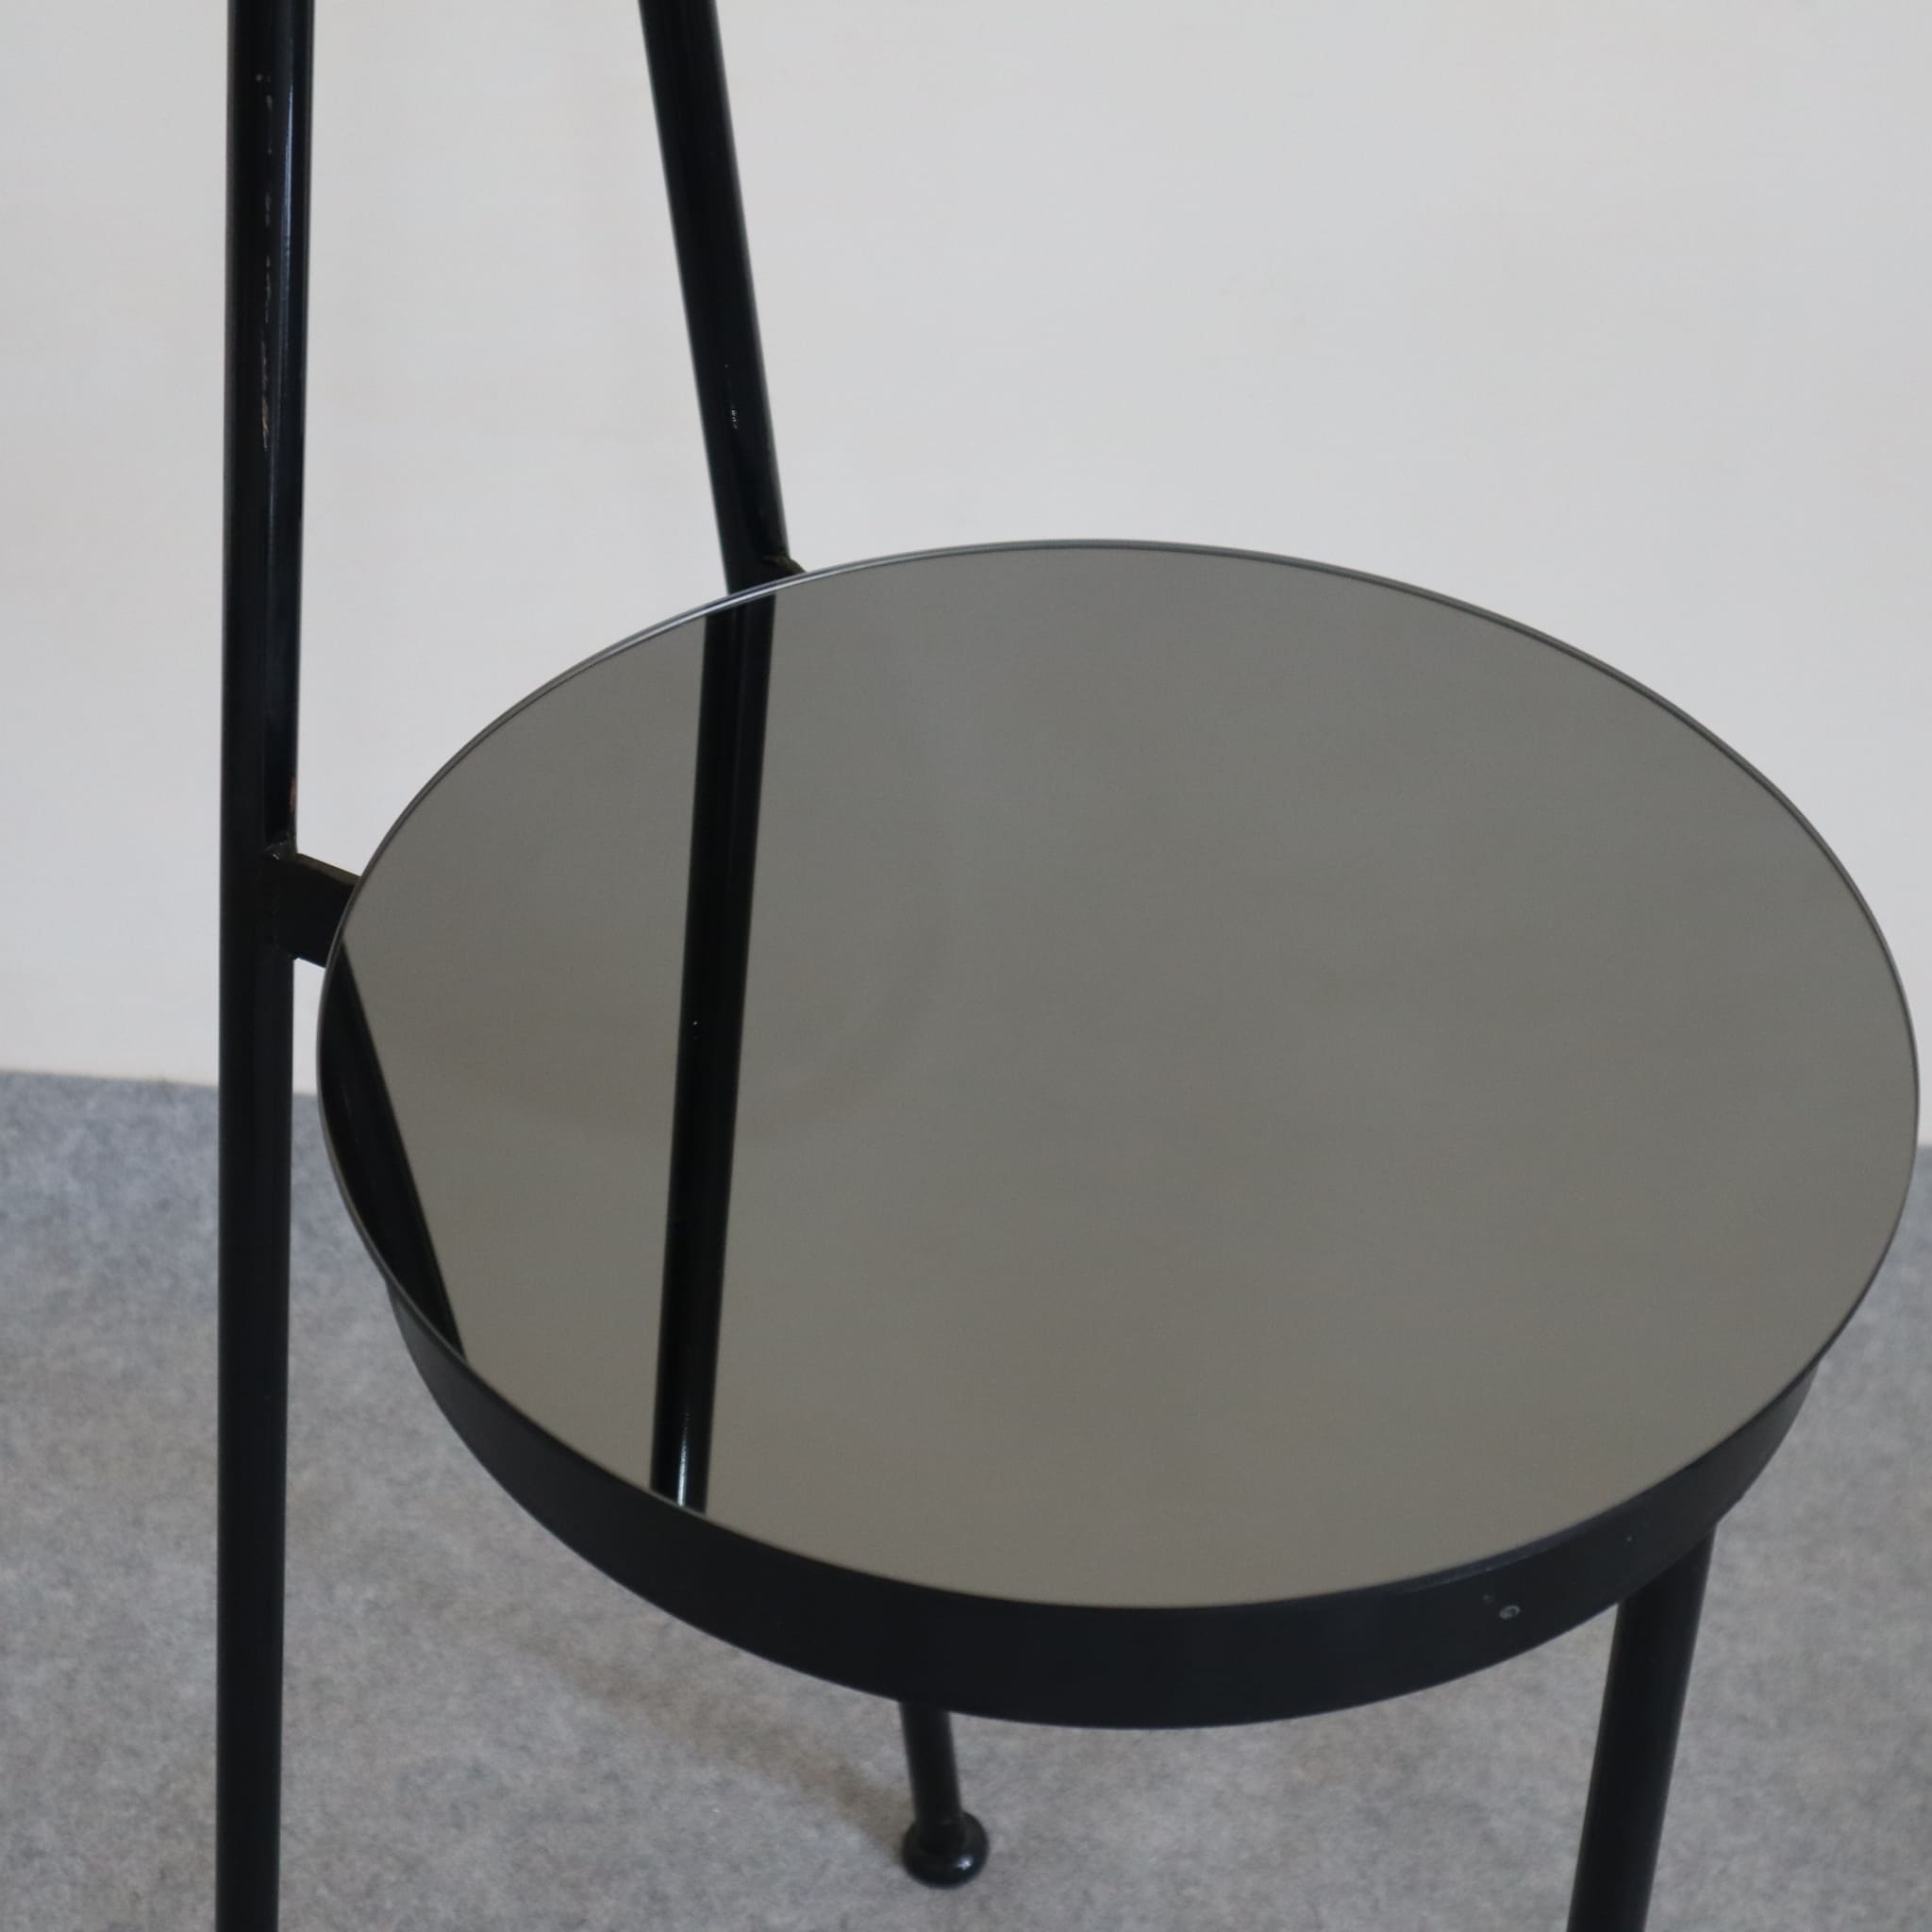 pettinius-black-dressing table-90s-grey-mirror-philippe-starck-style-base-detail-visionidepoca